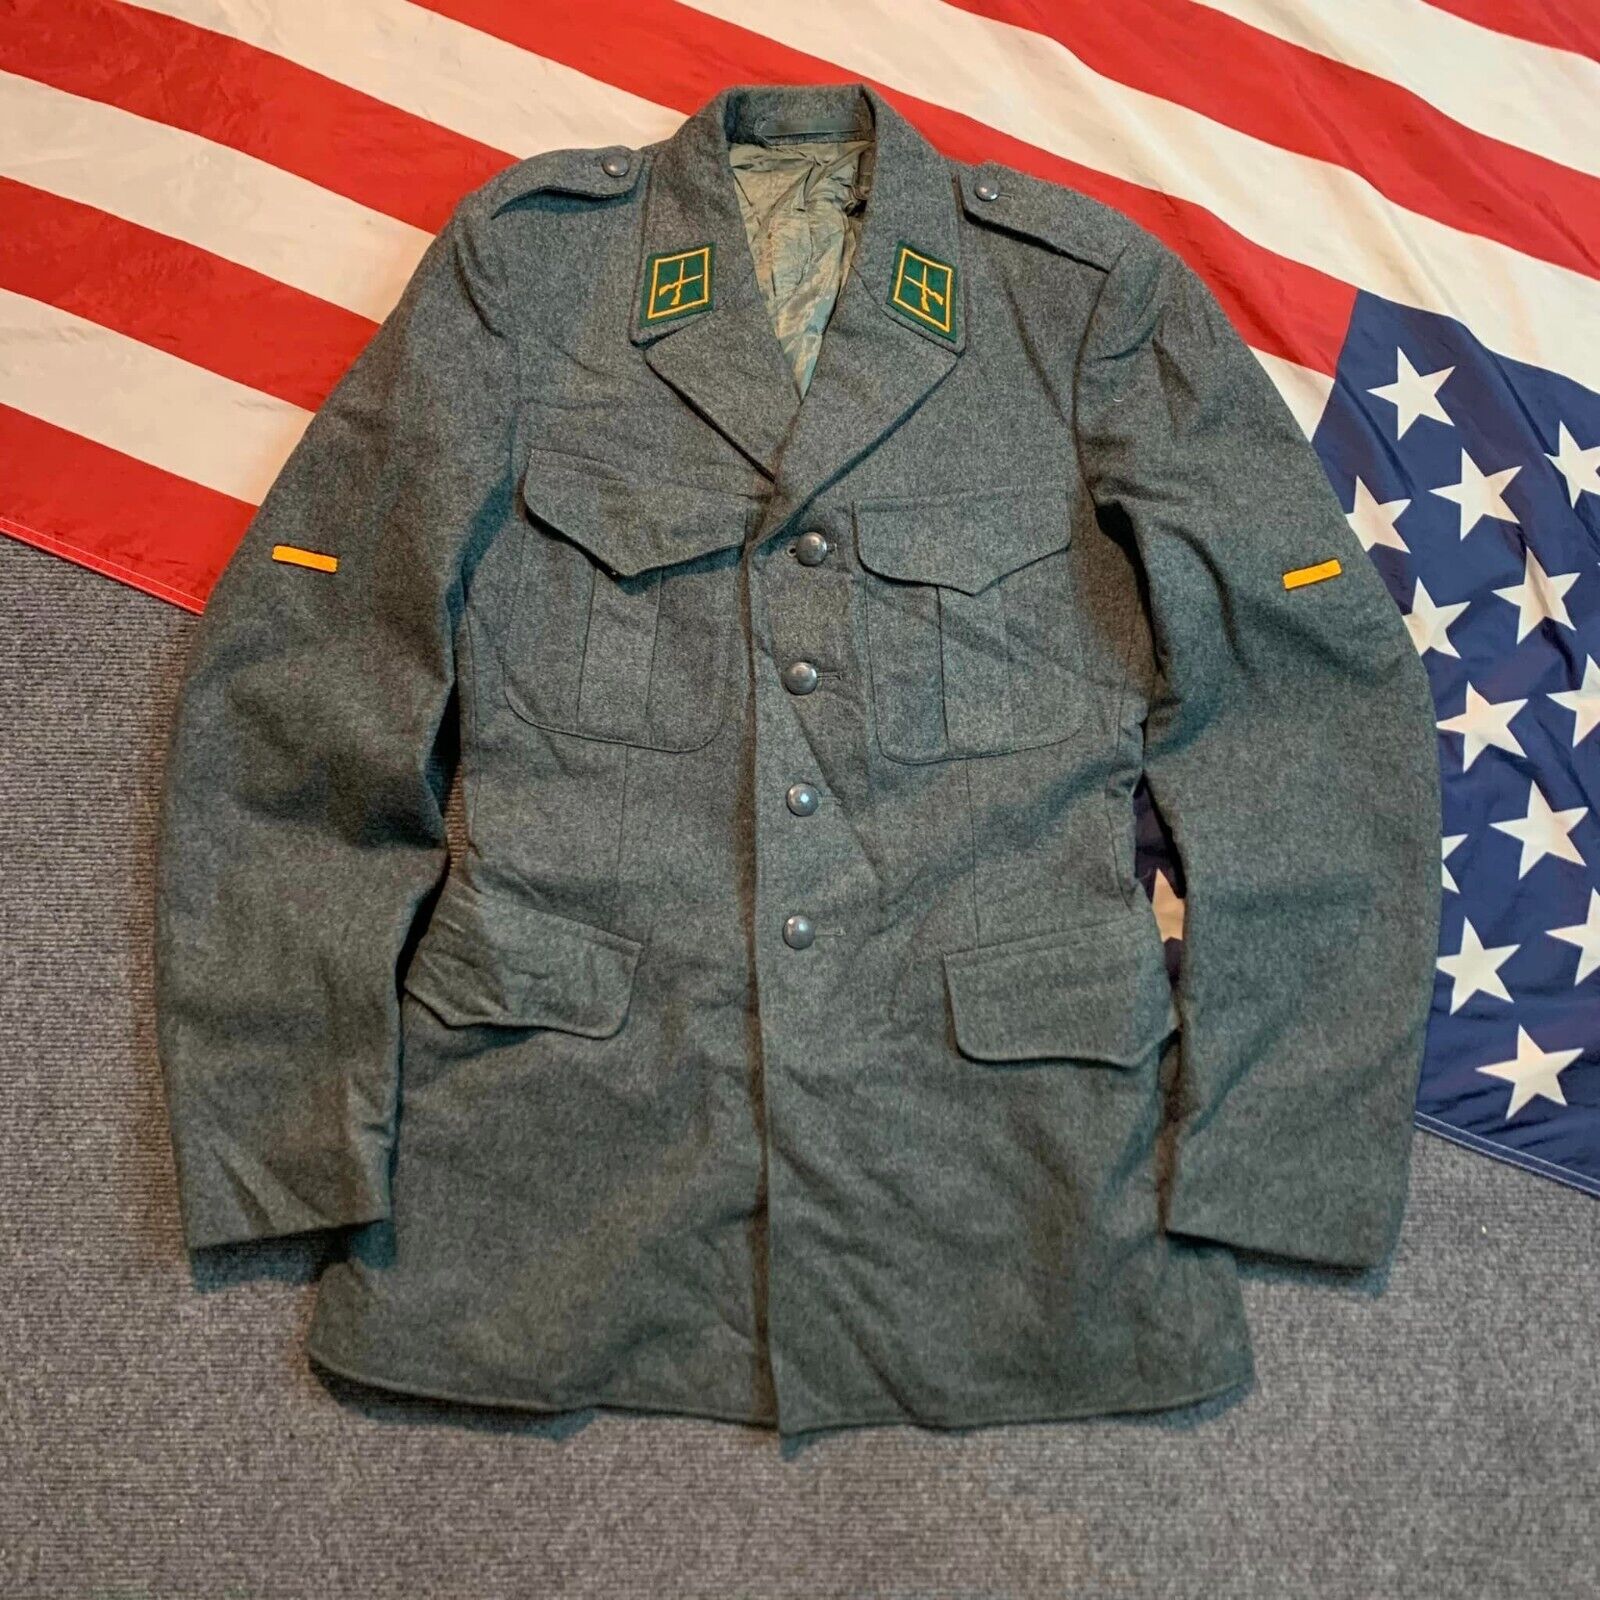 Original Swiss Army wool jacket with insignia